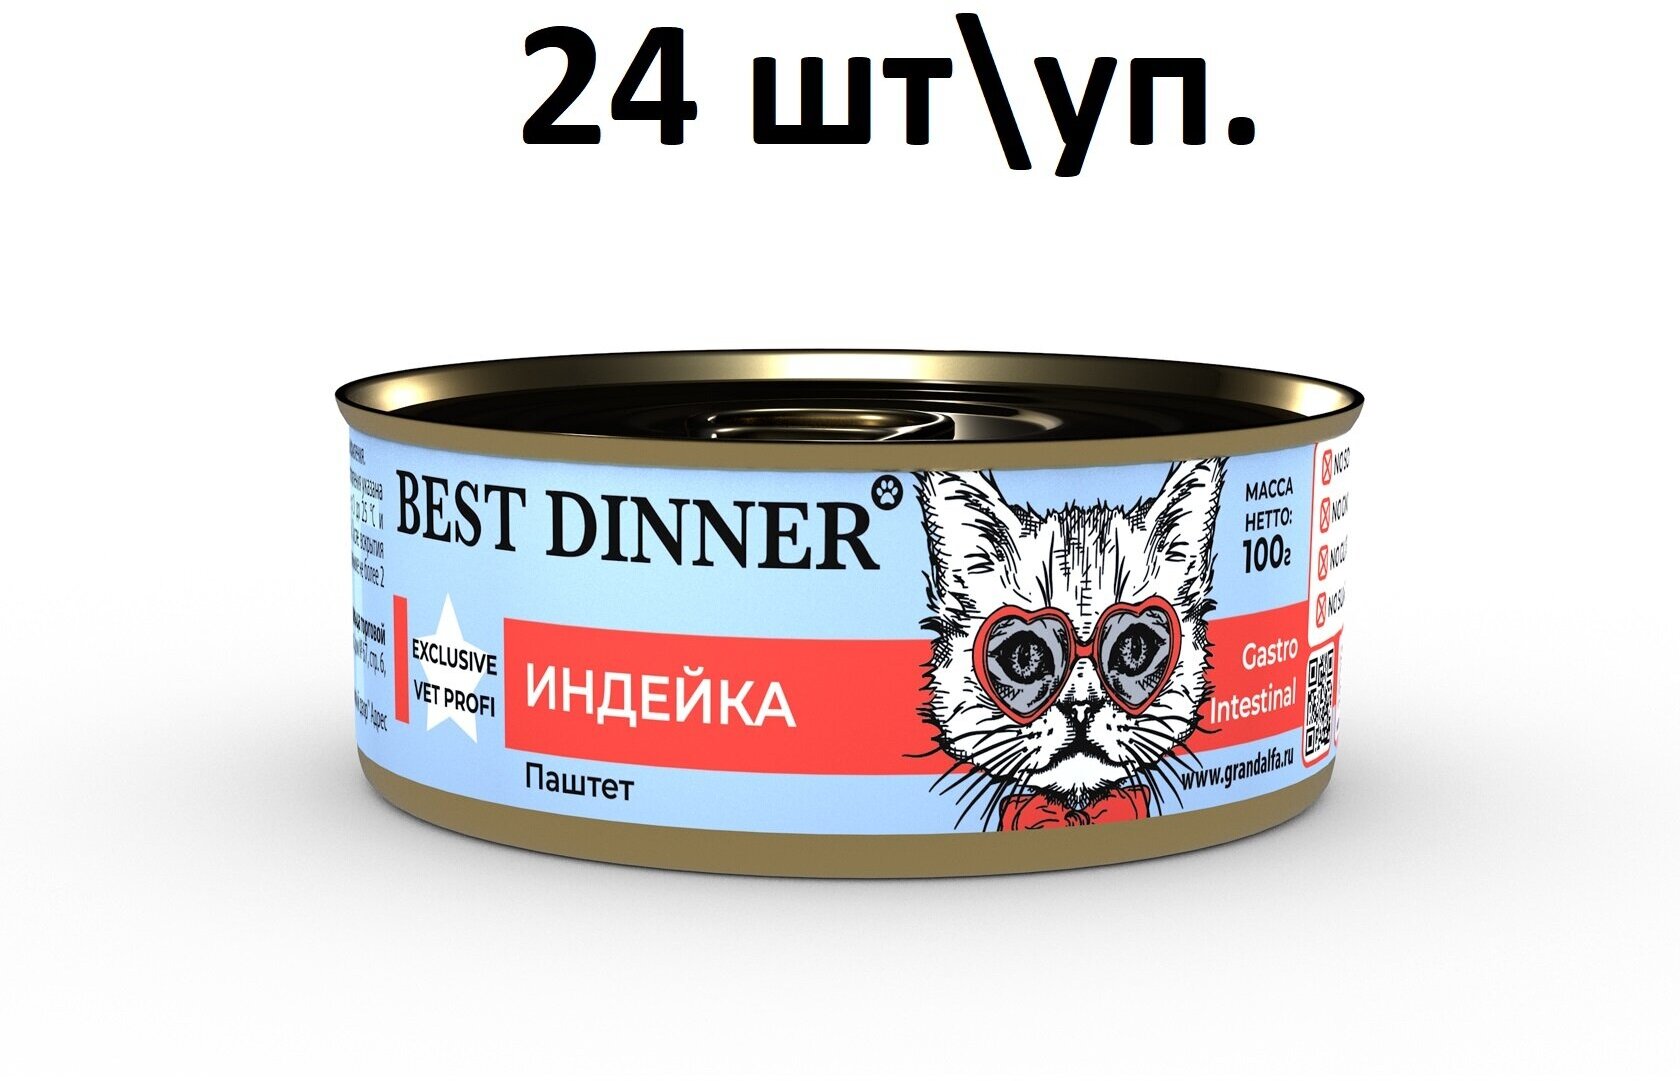 Best Dinner Vet Profi Gastro Intestinal Exclusive 0,1кг индейка консервы для кошек 24шт/1уп